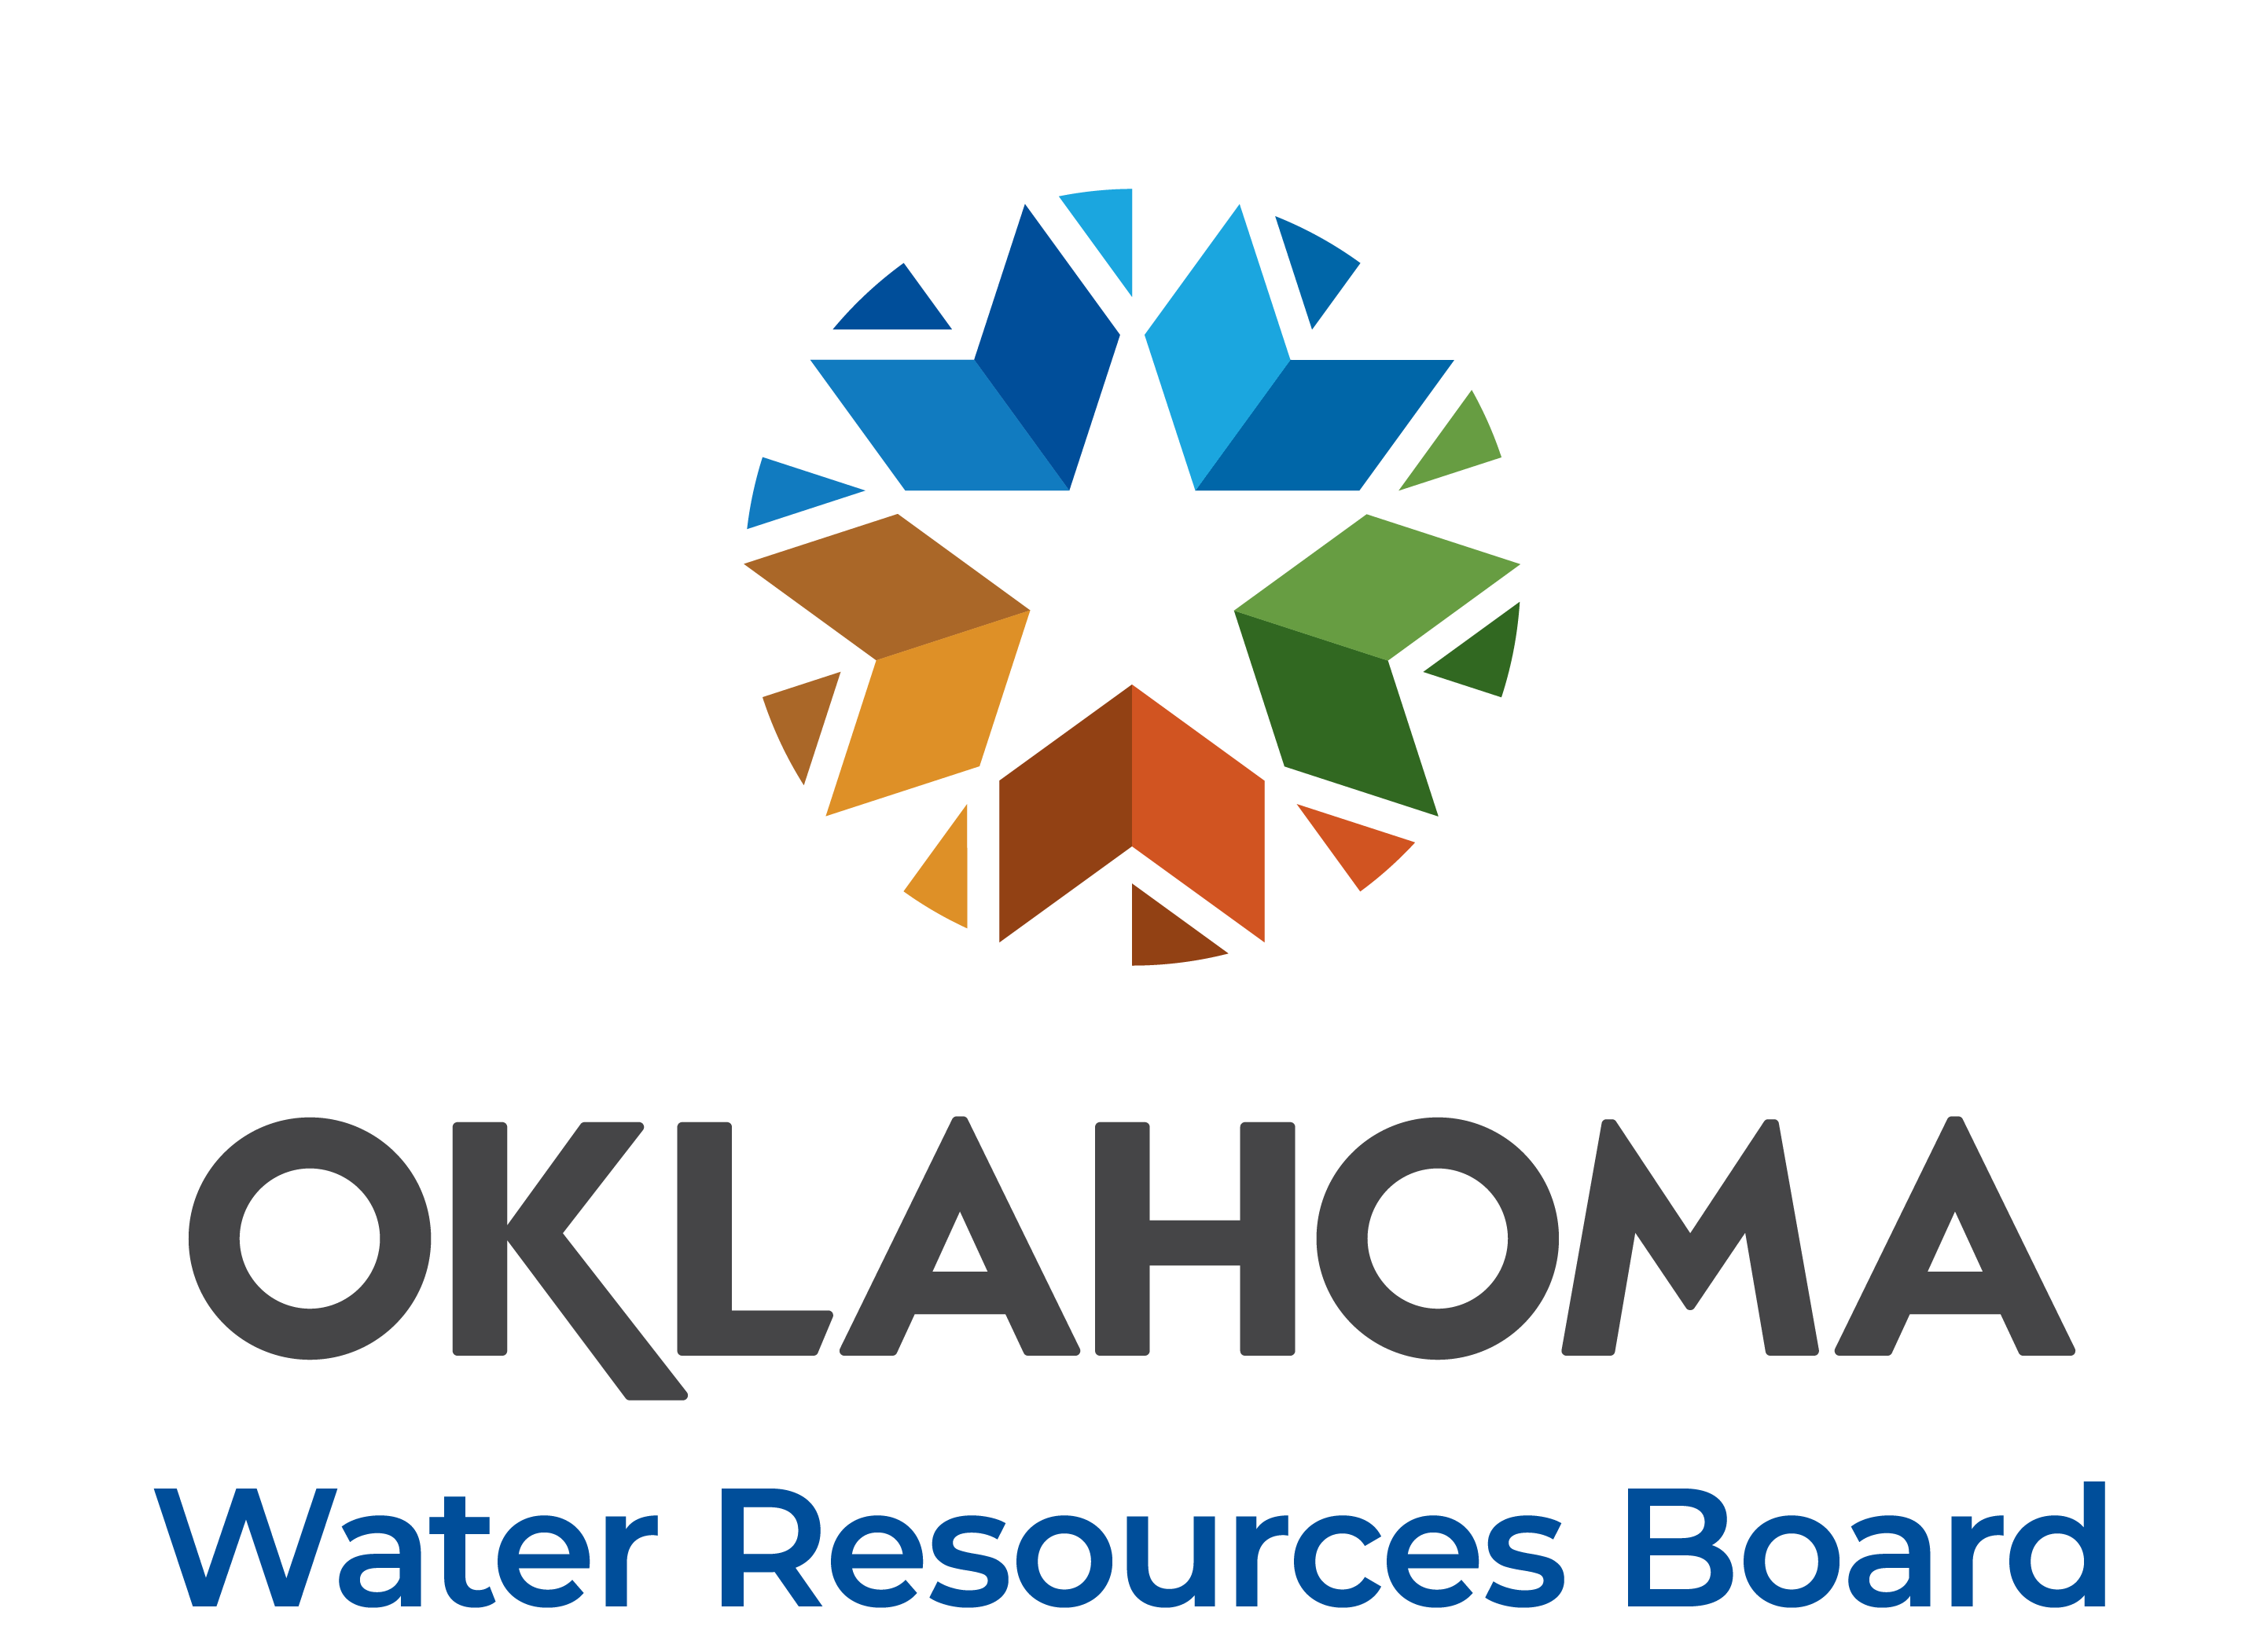 Oklahoma Water Resources Board logo